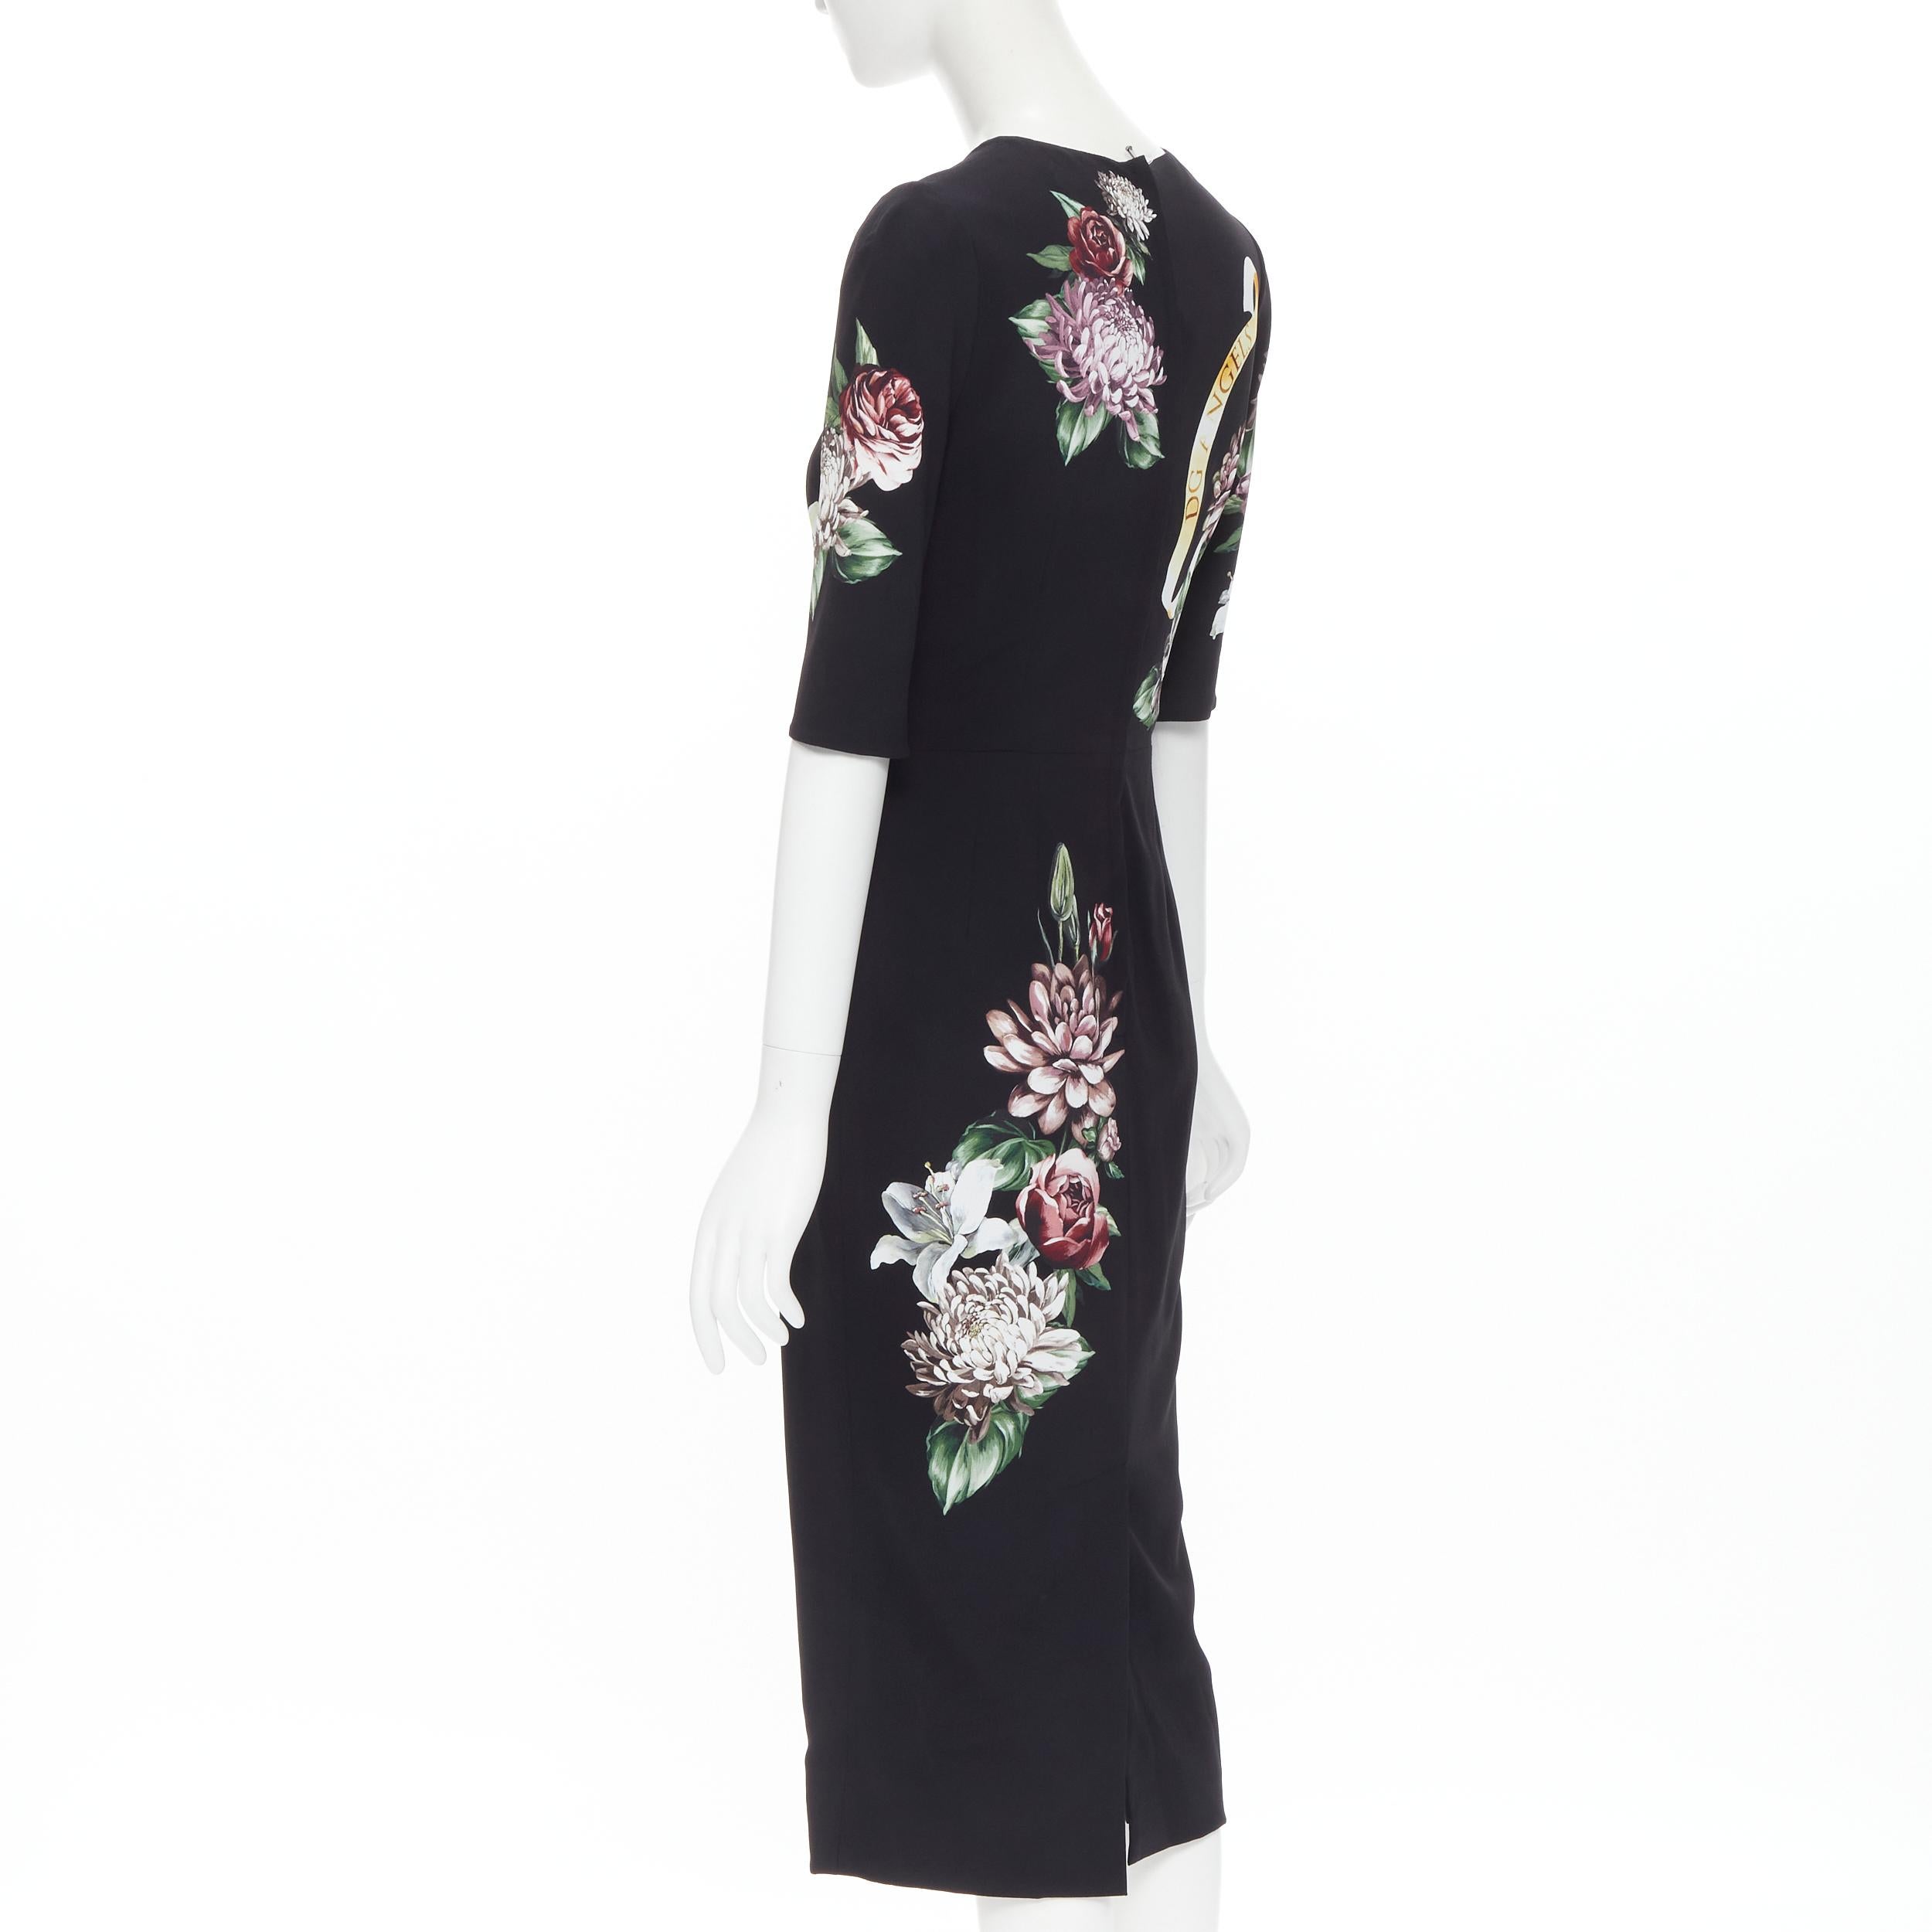 dolce gabbana black dress with flowers